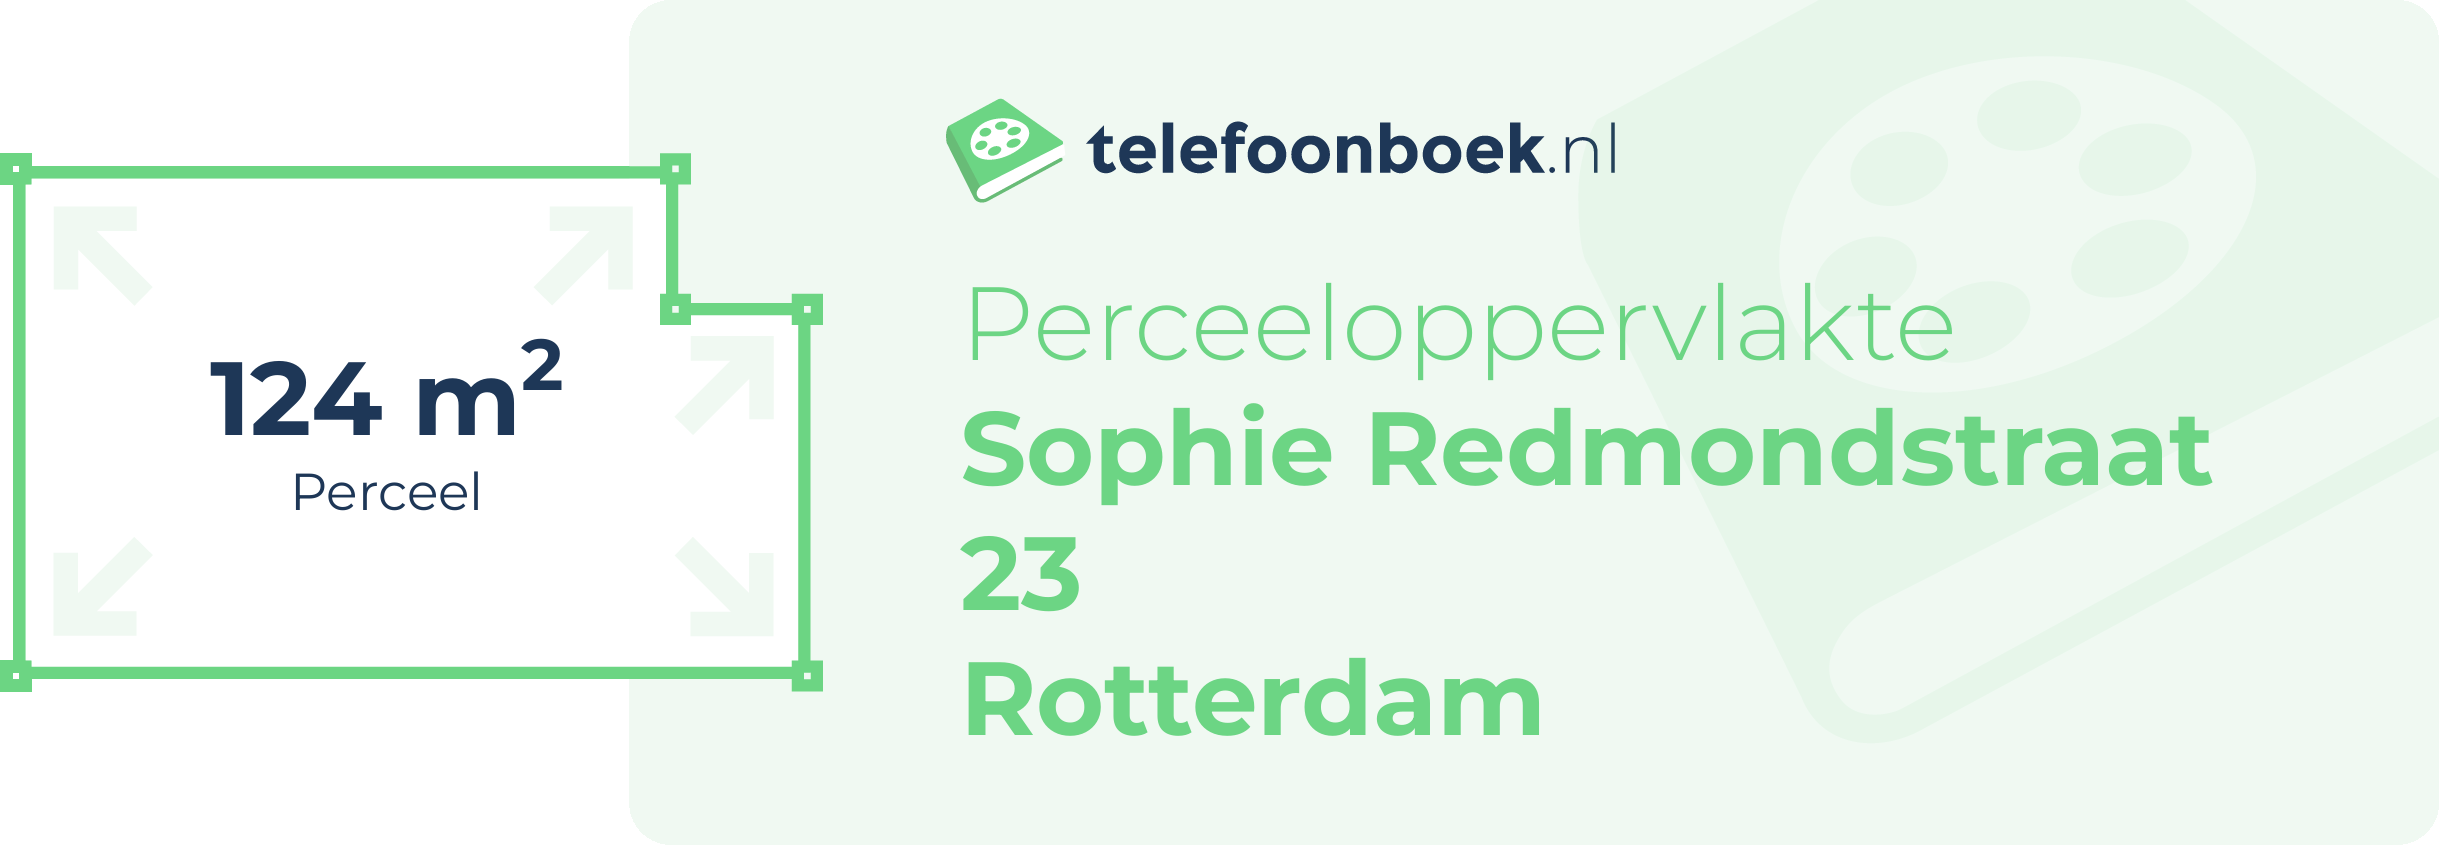 Perceeloppervlakte Sophie Redmondstraat 23 Rotterdam